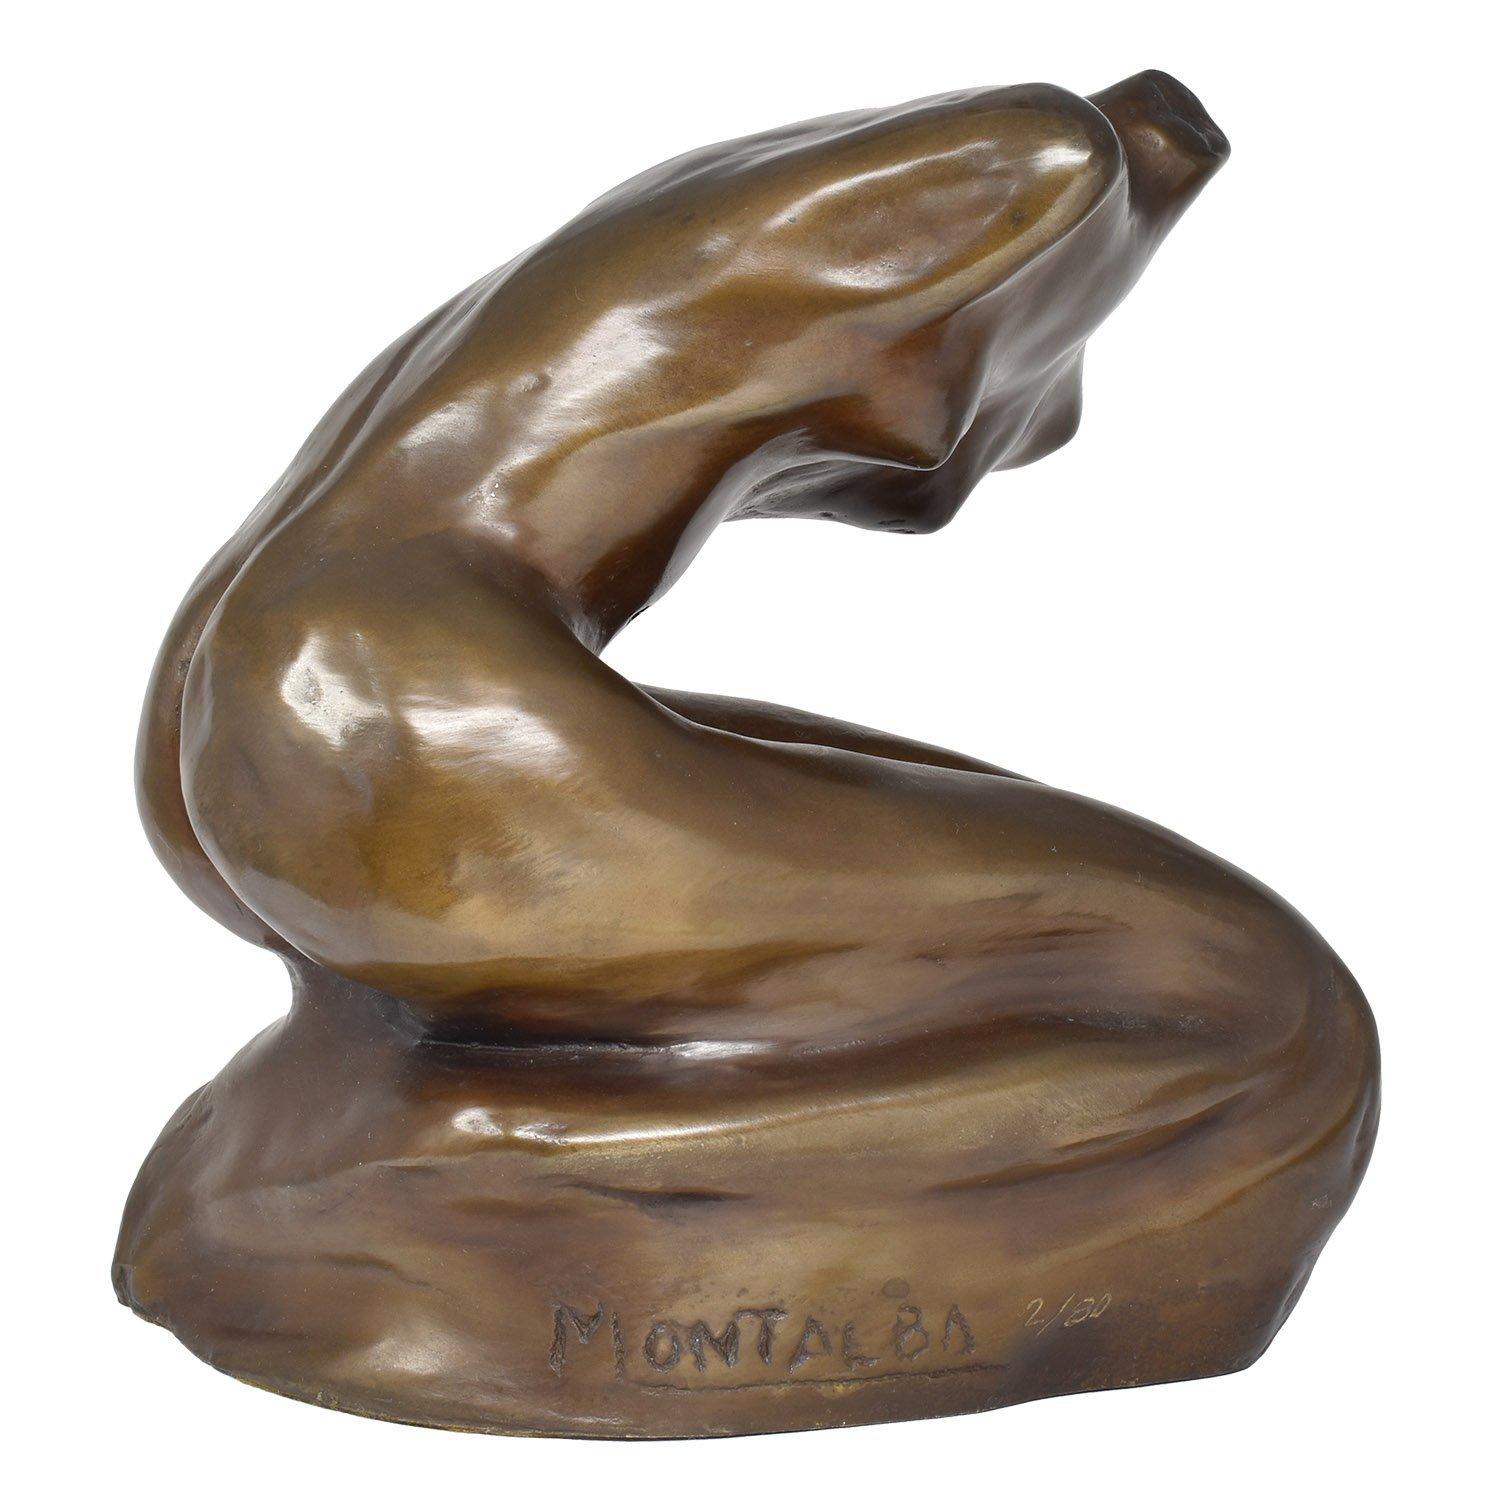 Bronze sculpture by Montalba

Undated
Bronze
6.5 h x 6.25 x 3.75 in. / 16.5 x 16 x 9.5 cm
Signed “Montalba,” edition 2 of 80.